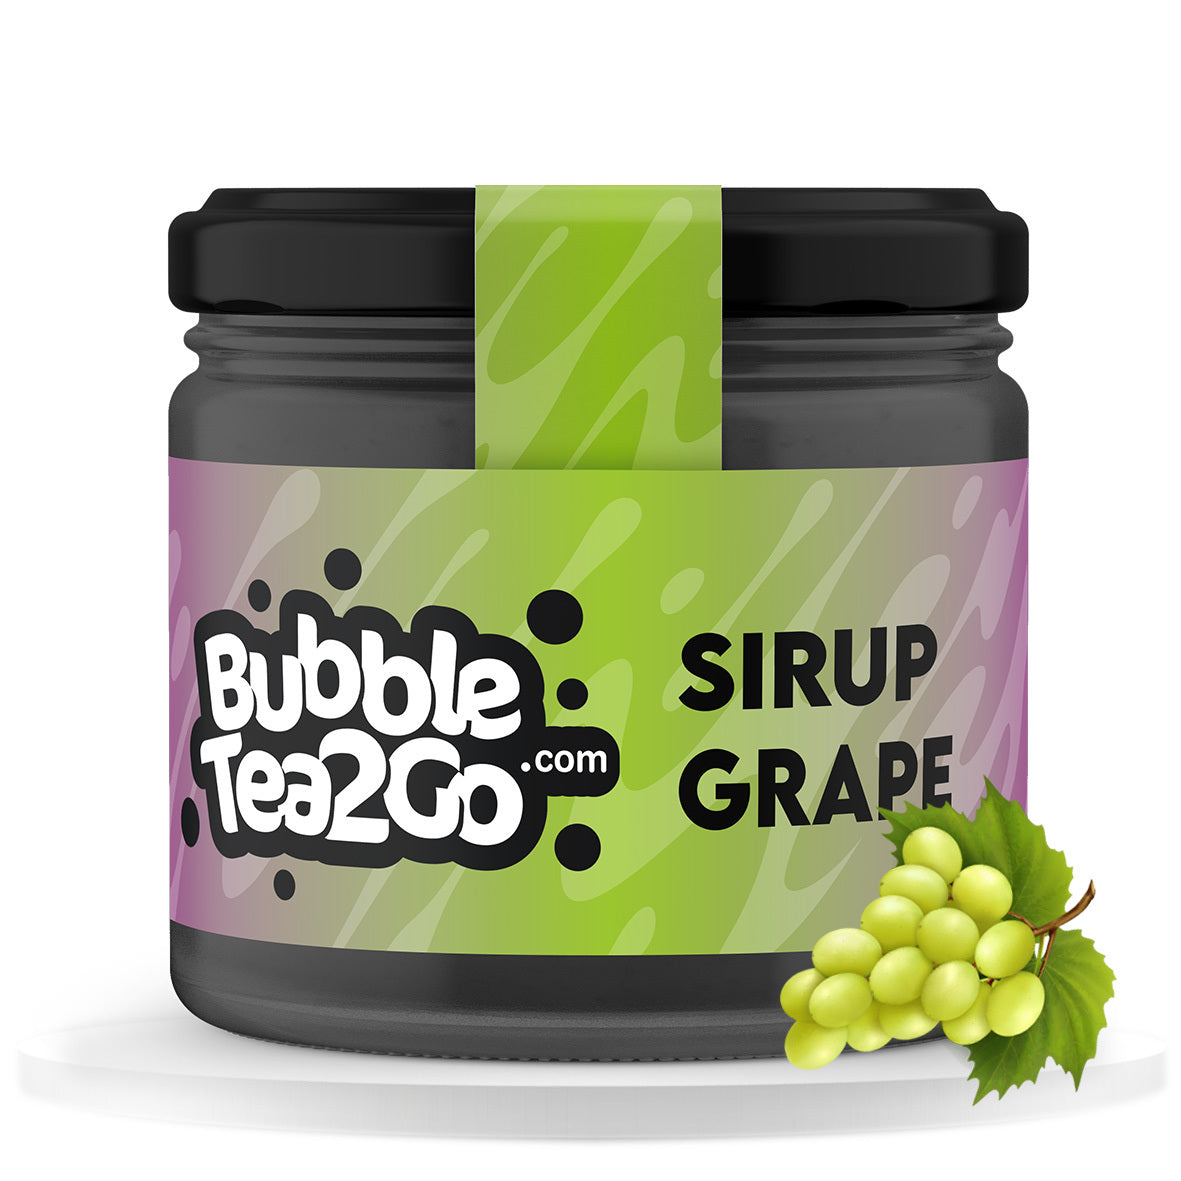 Sirop - Grape 2 portions (50g)